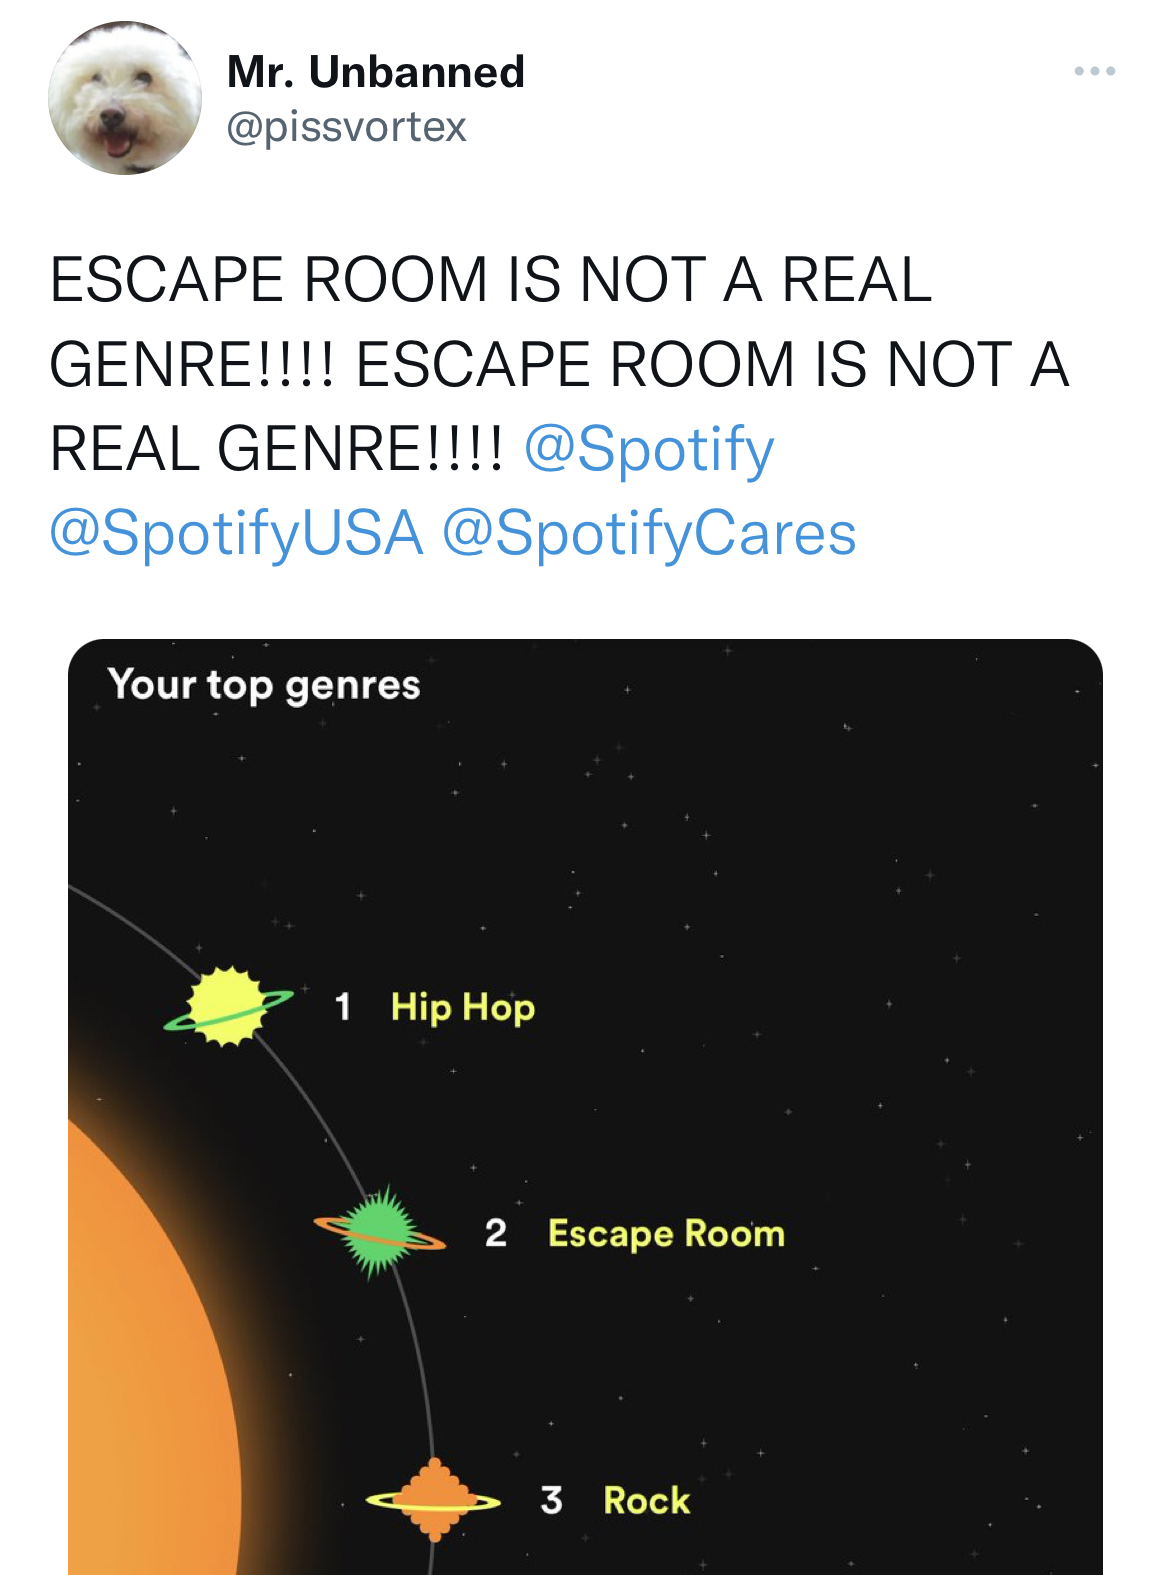 Spotify Wrapped Memes - sky - Mr. Unbanned Escape Room Is Not A Real Genre!!!! Escape Room Is Not A Real Genre!!!! Your top genres 1 Hip Hop 2 Escape Room 3 Rock